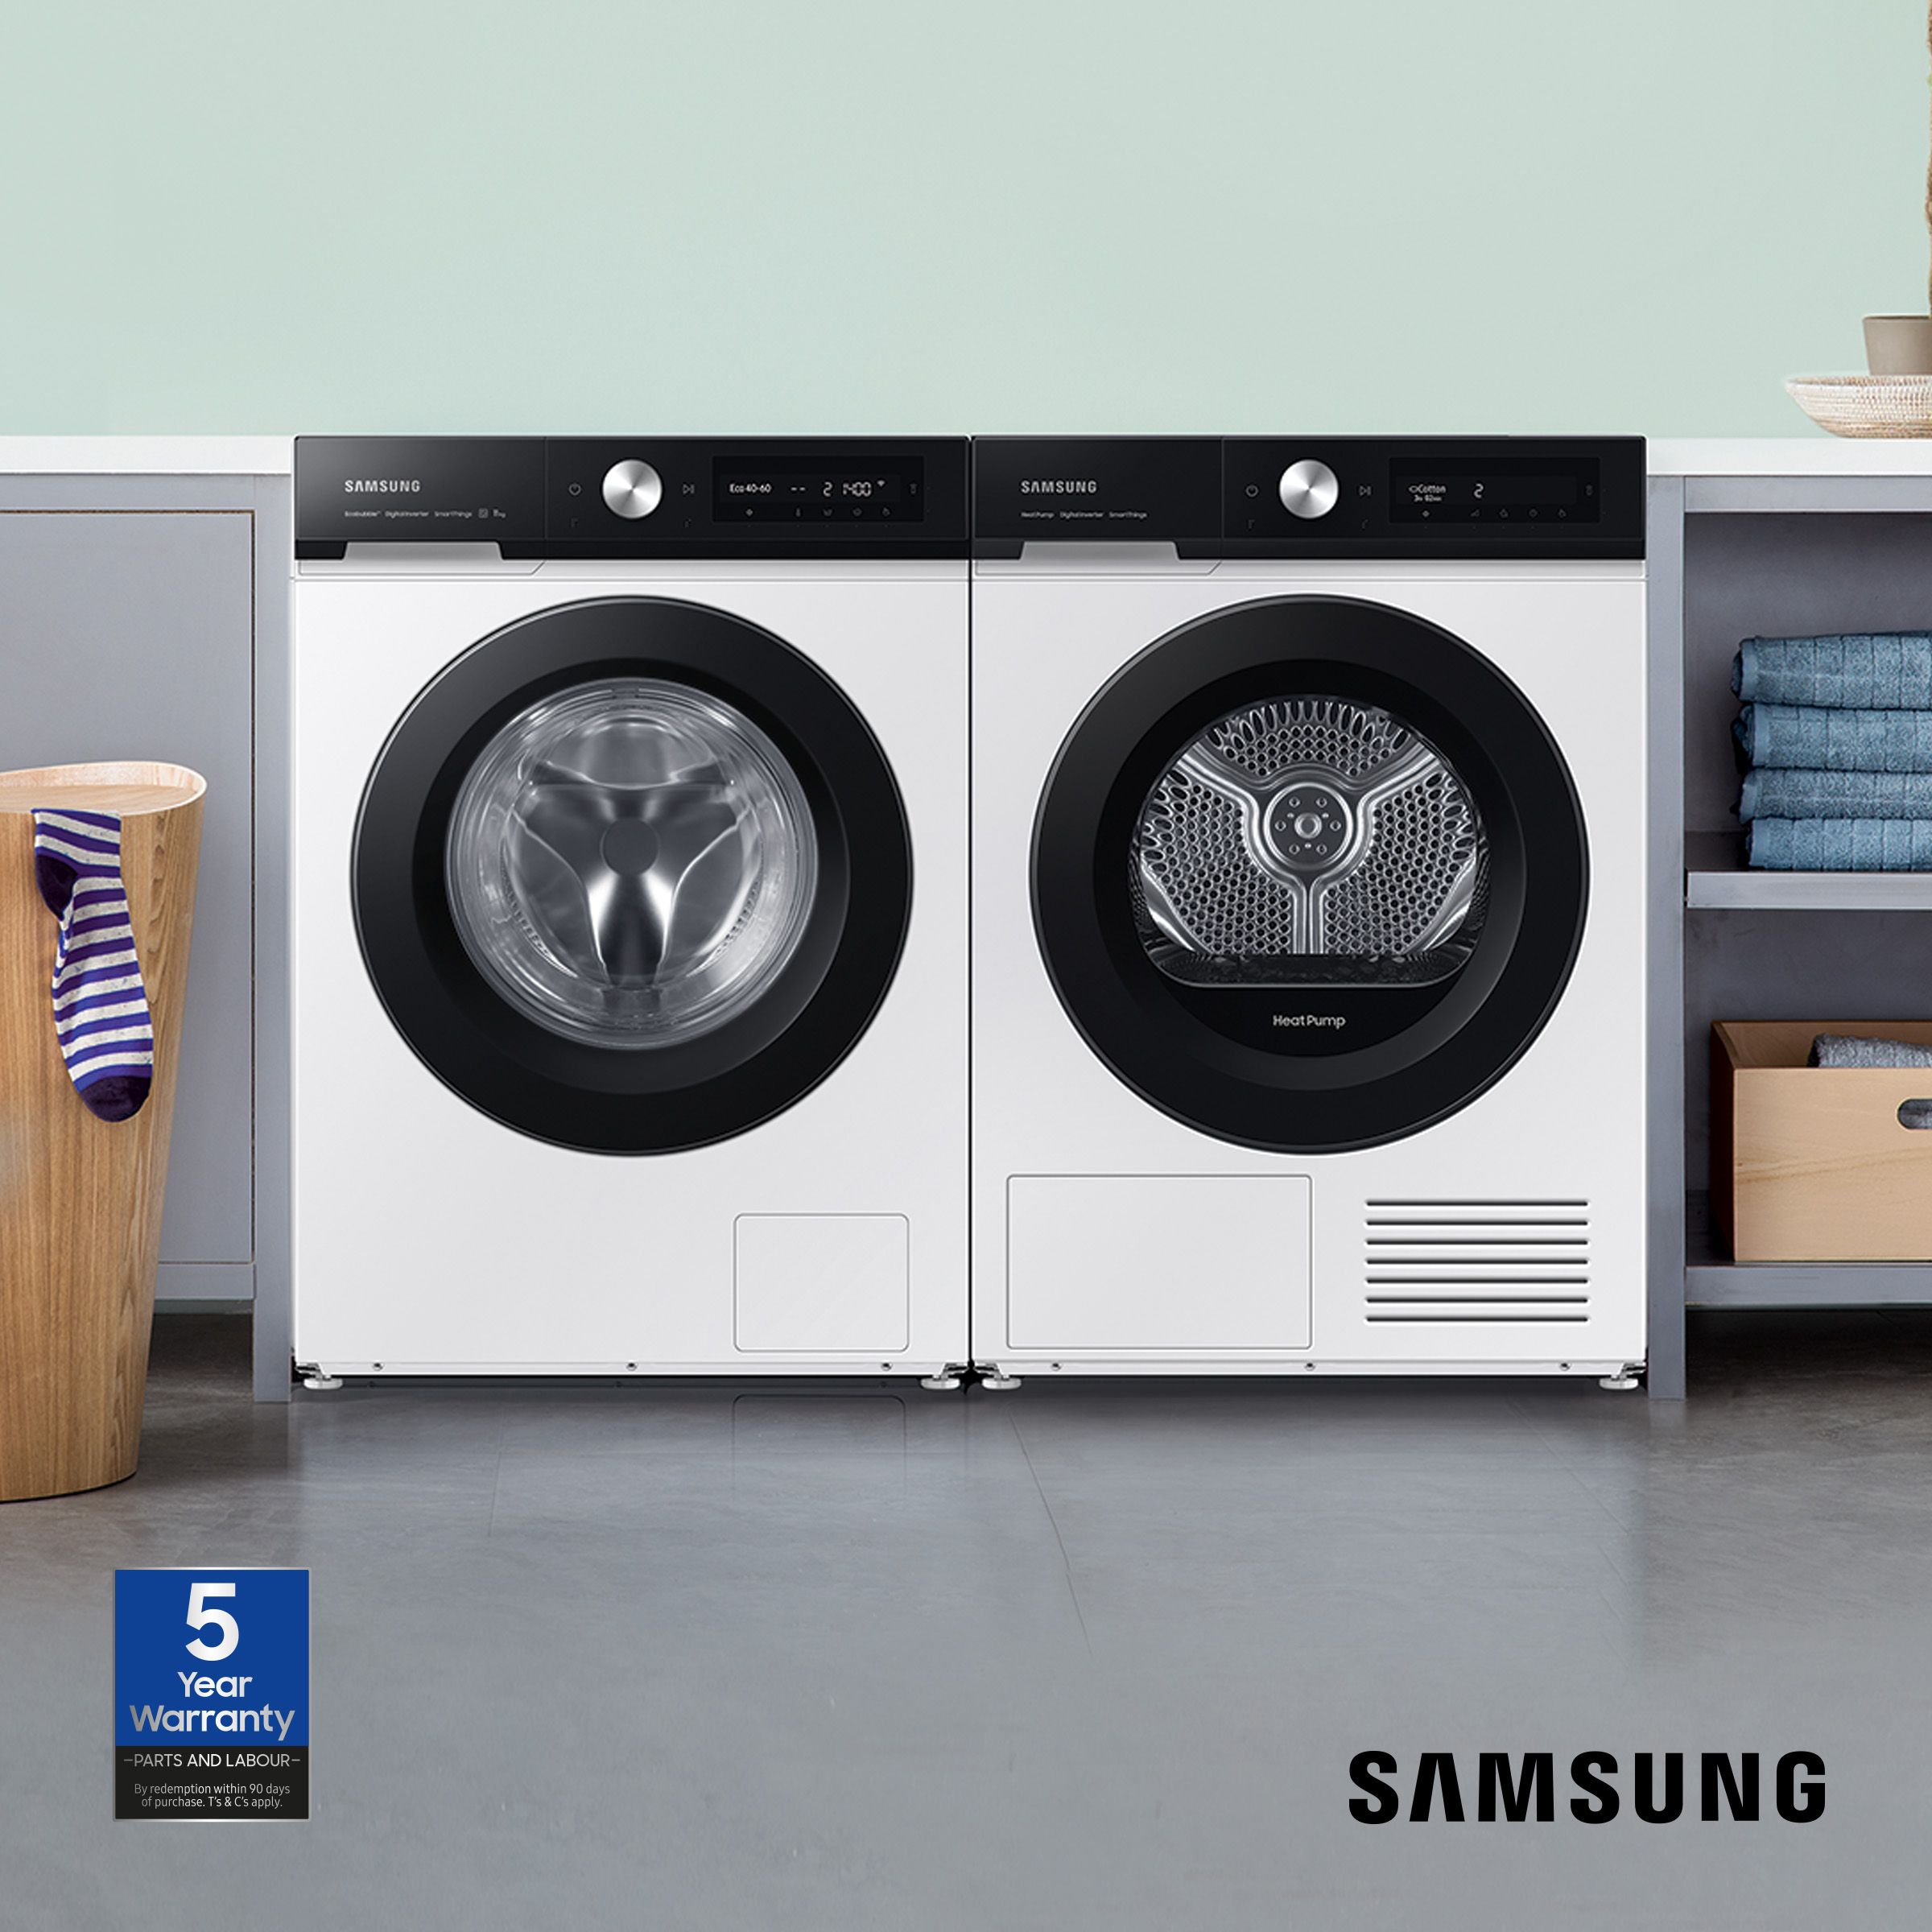 Save £50 on Samsung Heat Pump tumble dryers Plus claim an additional 3 years warranty